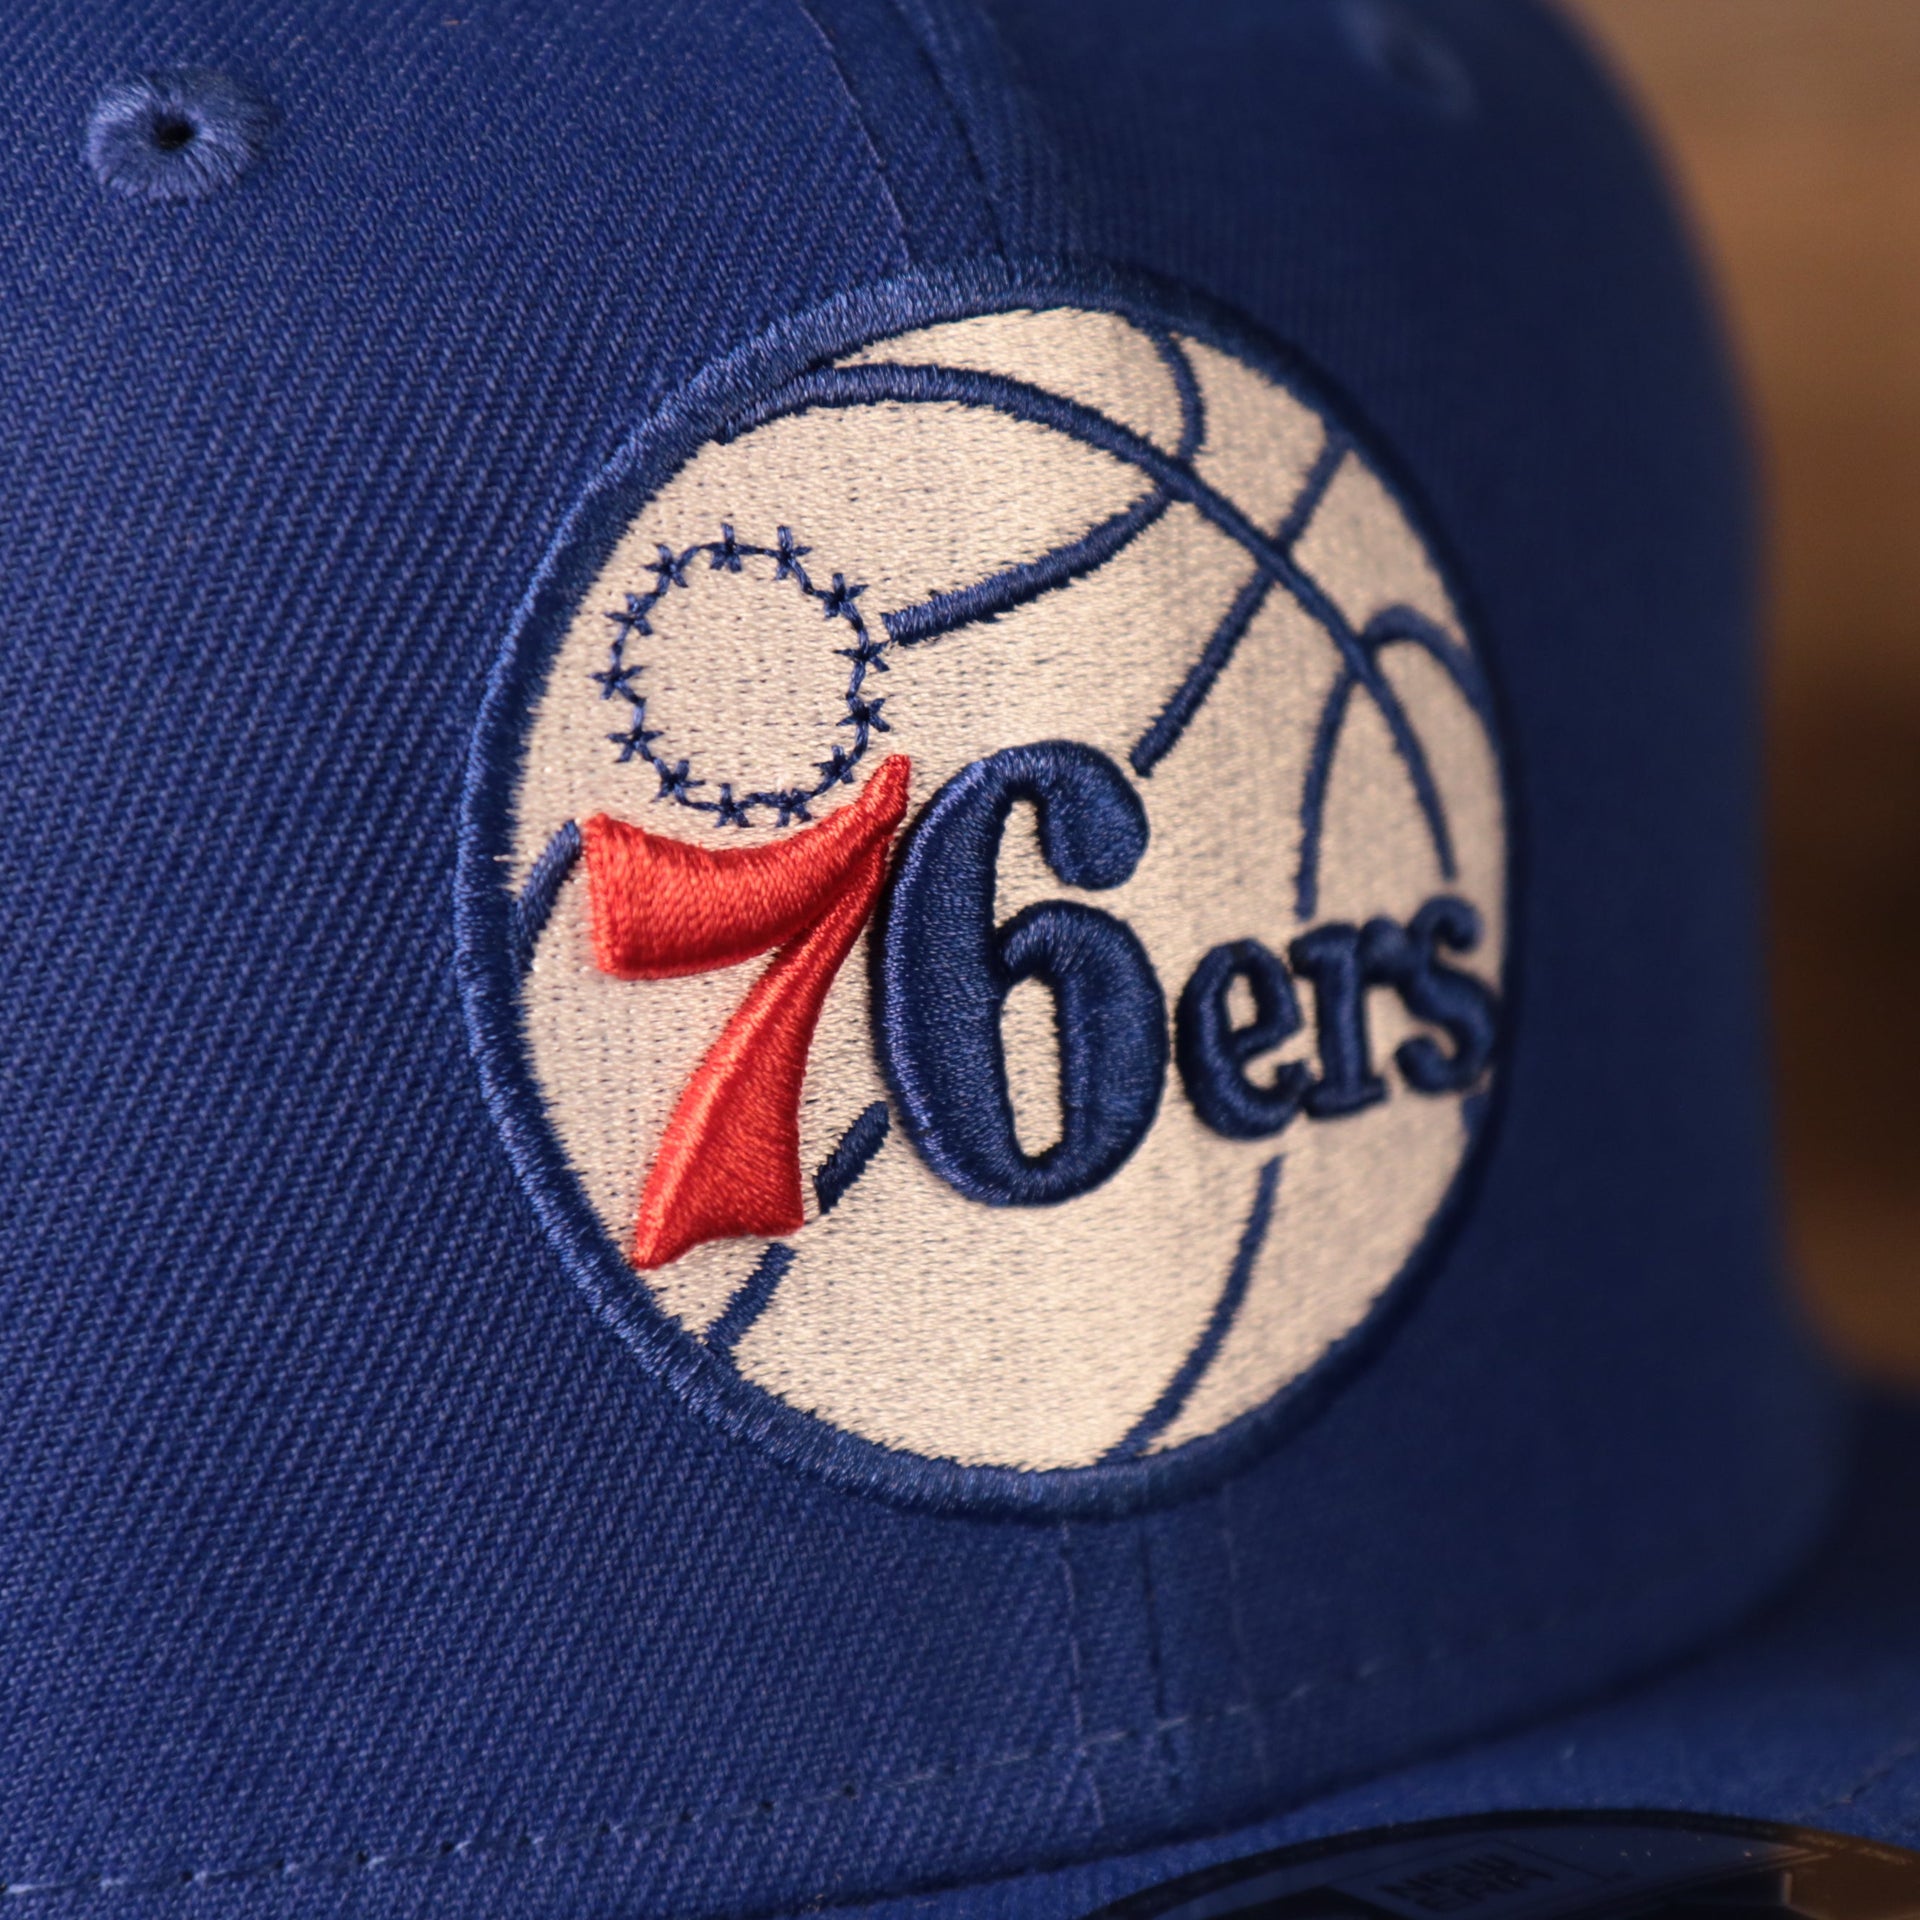 76ers logo on the Philadelphia 76ers 2021 NBA Playoffs Royal Blue 9Fifty Gray Bottom Snapback Hat